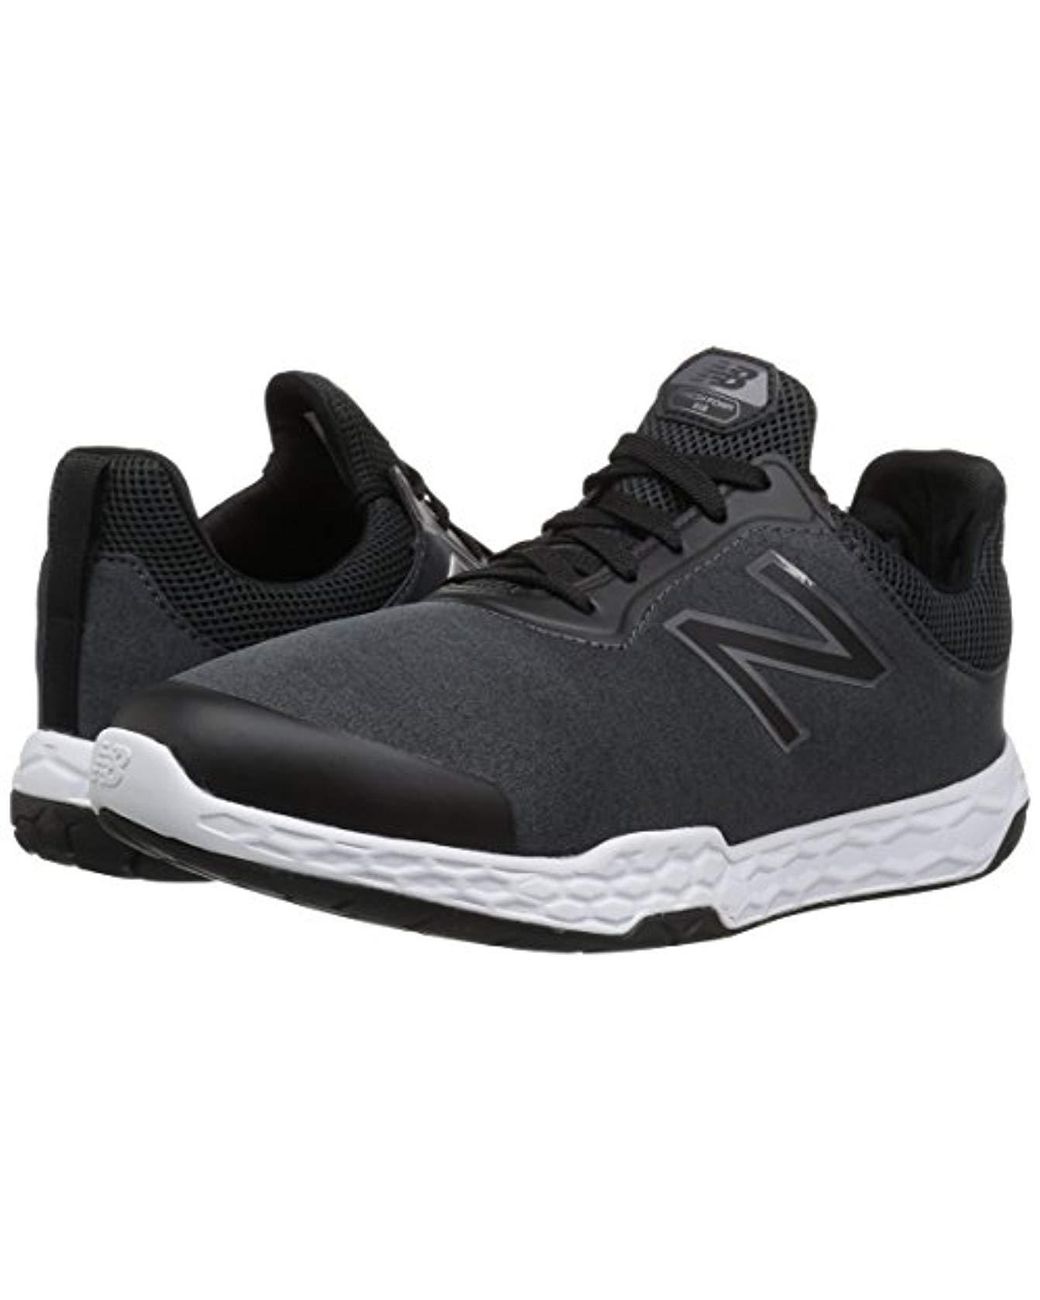 Footwear New Balance Menss Mx818v3 Fitness Shoes